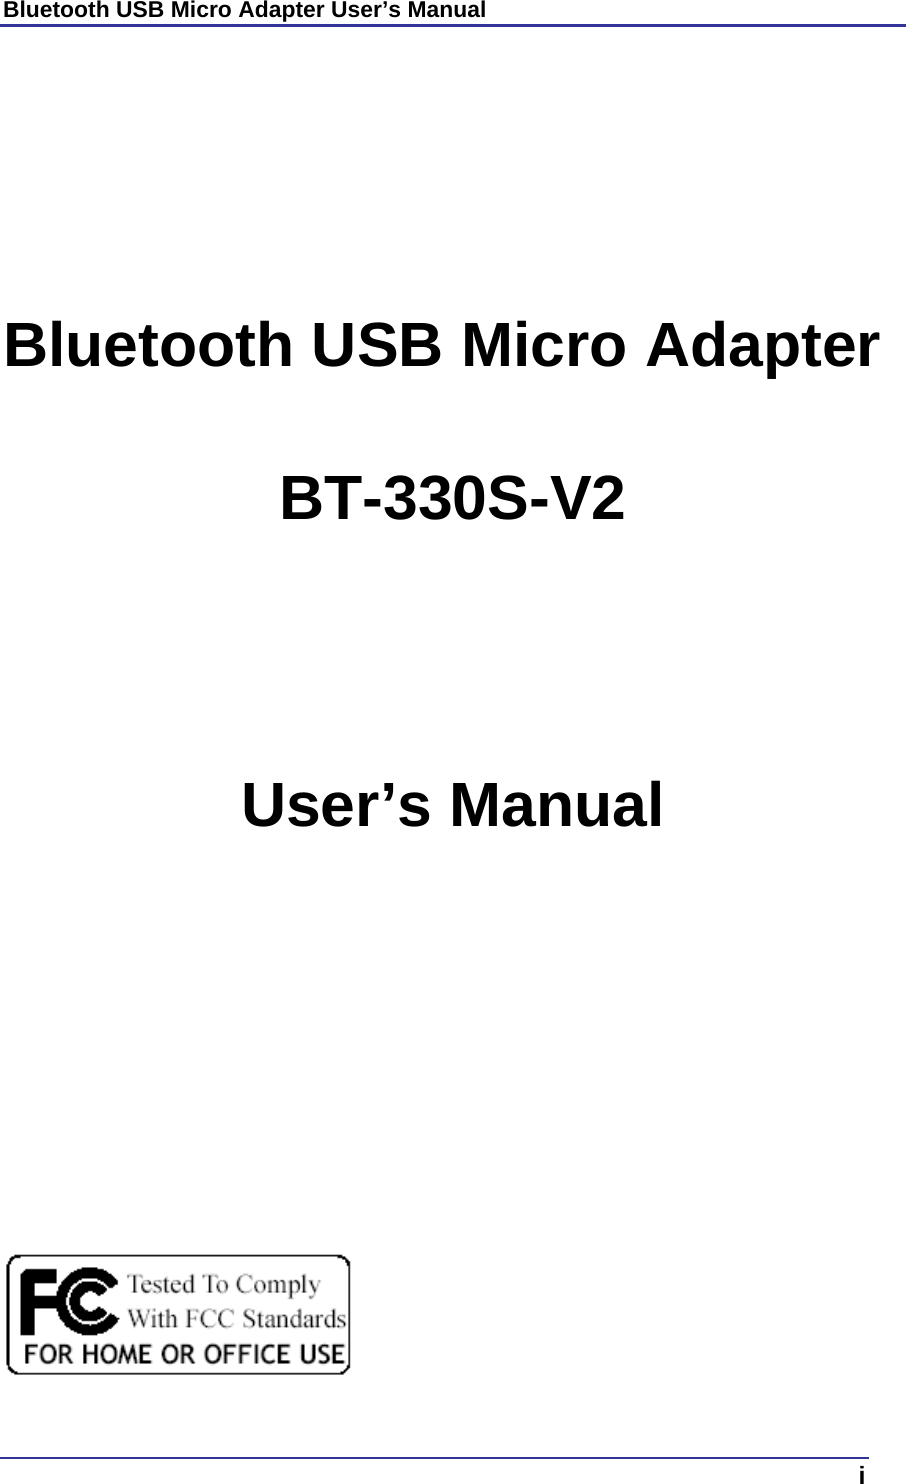 Bluetooth USB Micro Adapter User’s Manual  i       Bluetooth USB Micro Adapter BT-330S-V2  User’s Manual                         